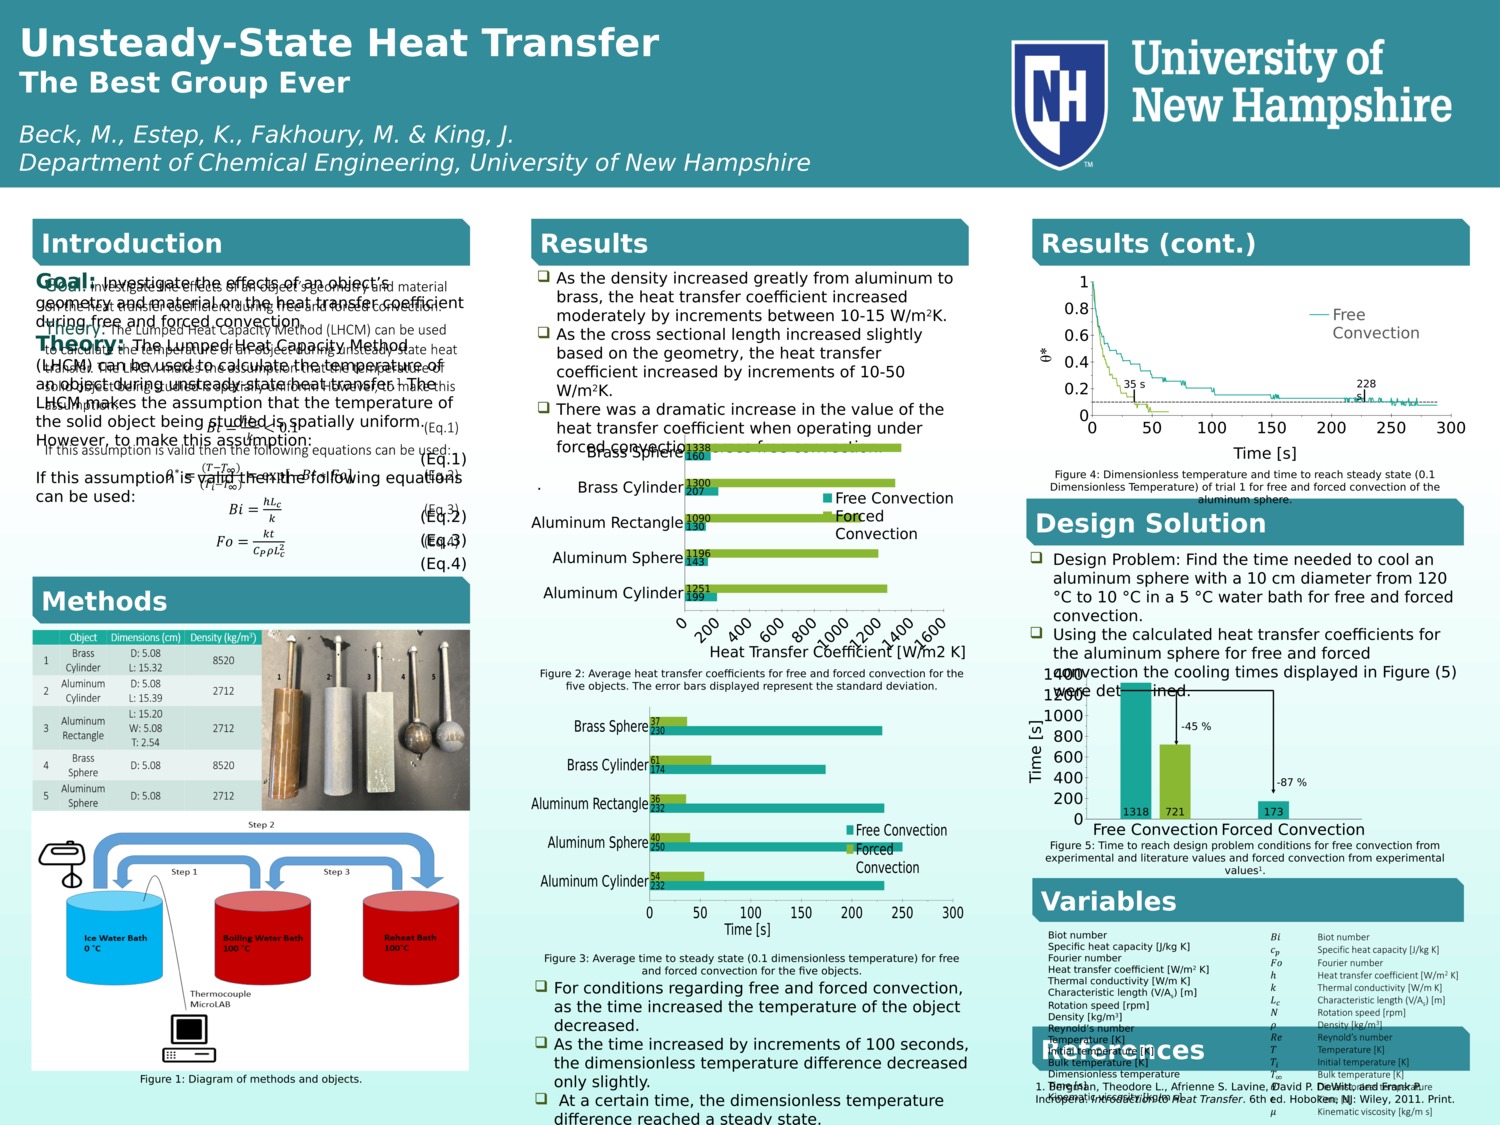 Unsteady-State Heat Transfer by mpj59